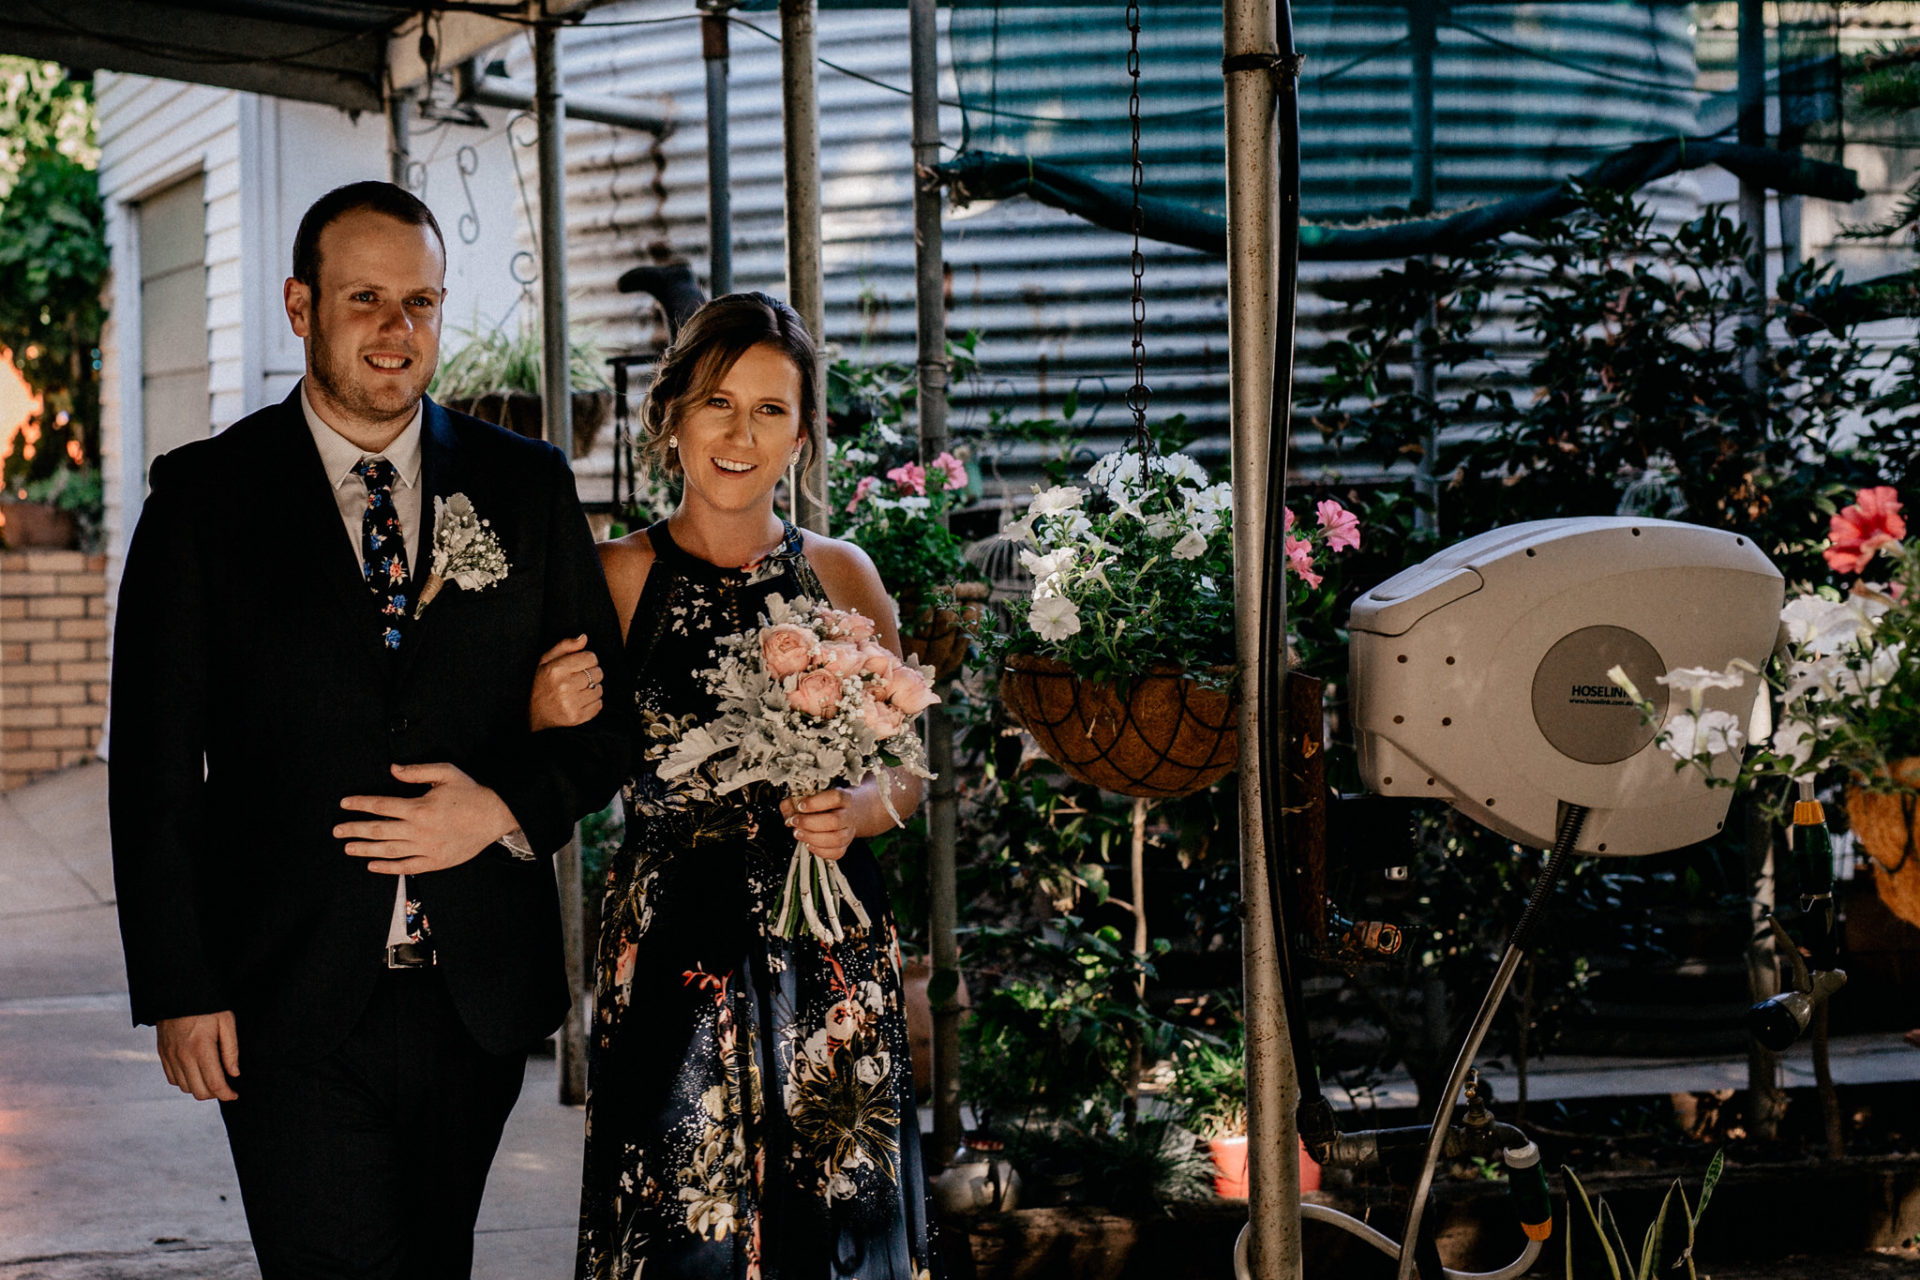 backyard-wedding-australia-melbourne-ceremony-bridal-party-walk-down-isle